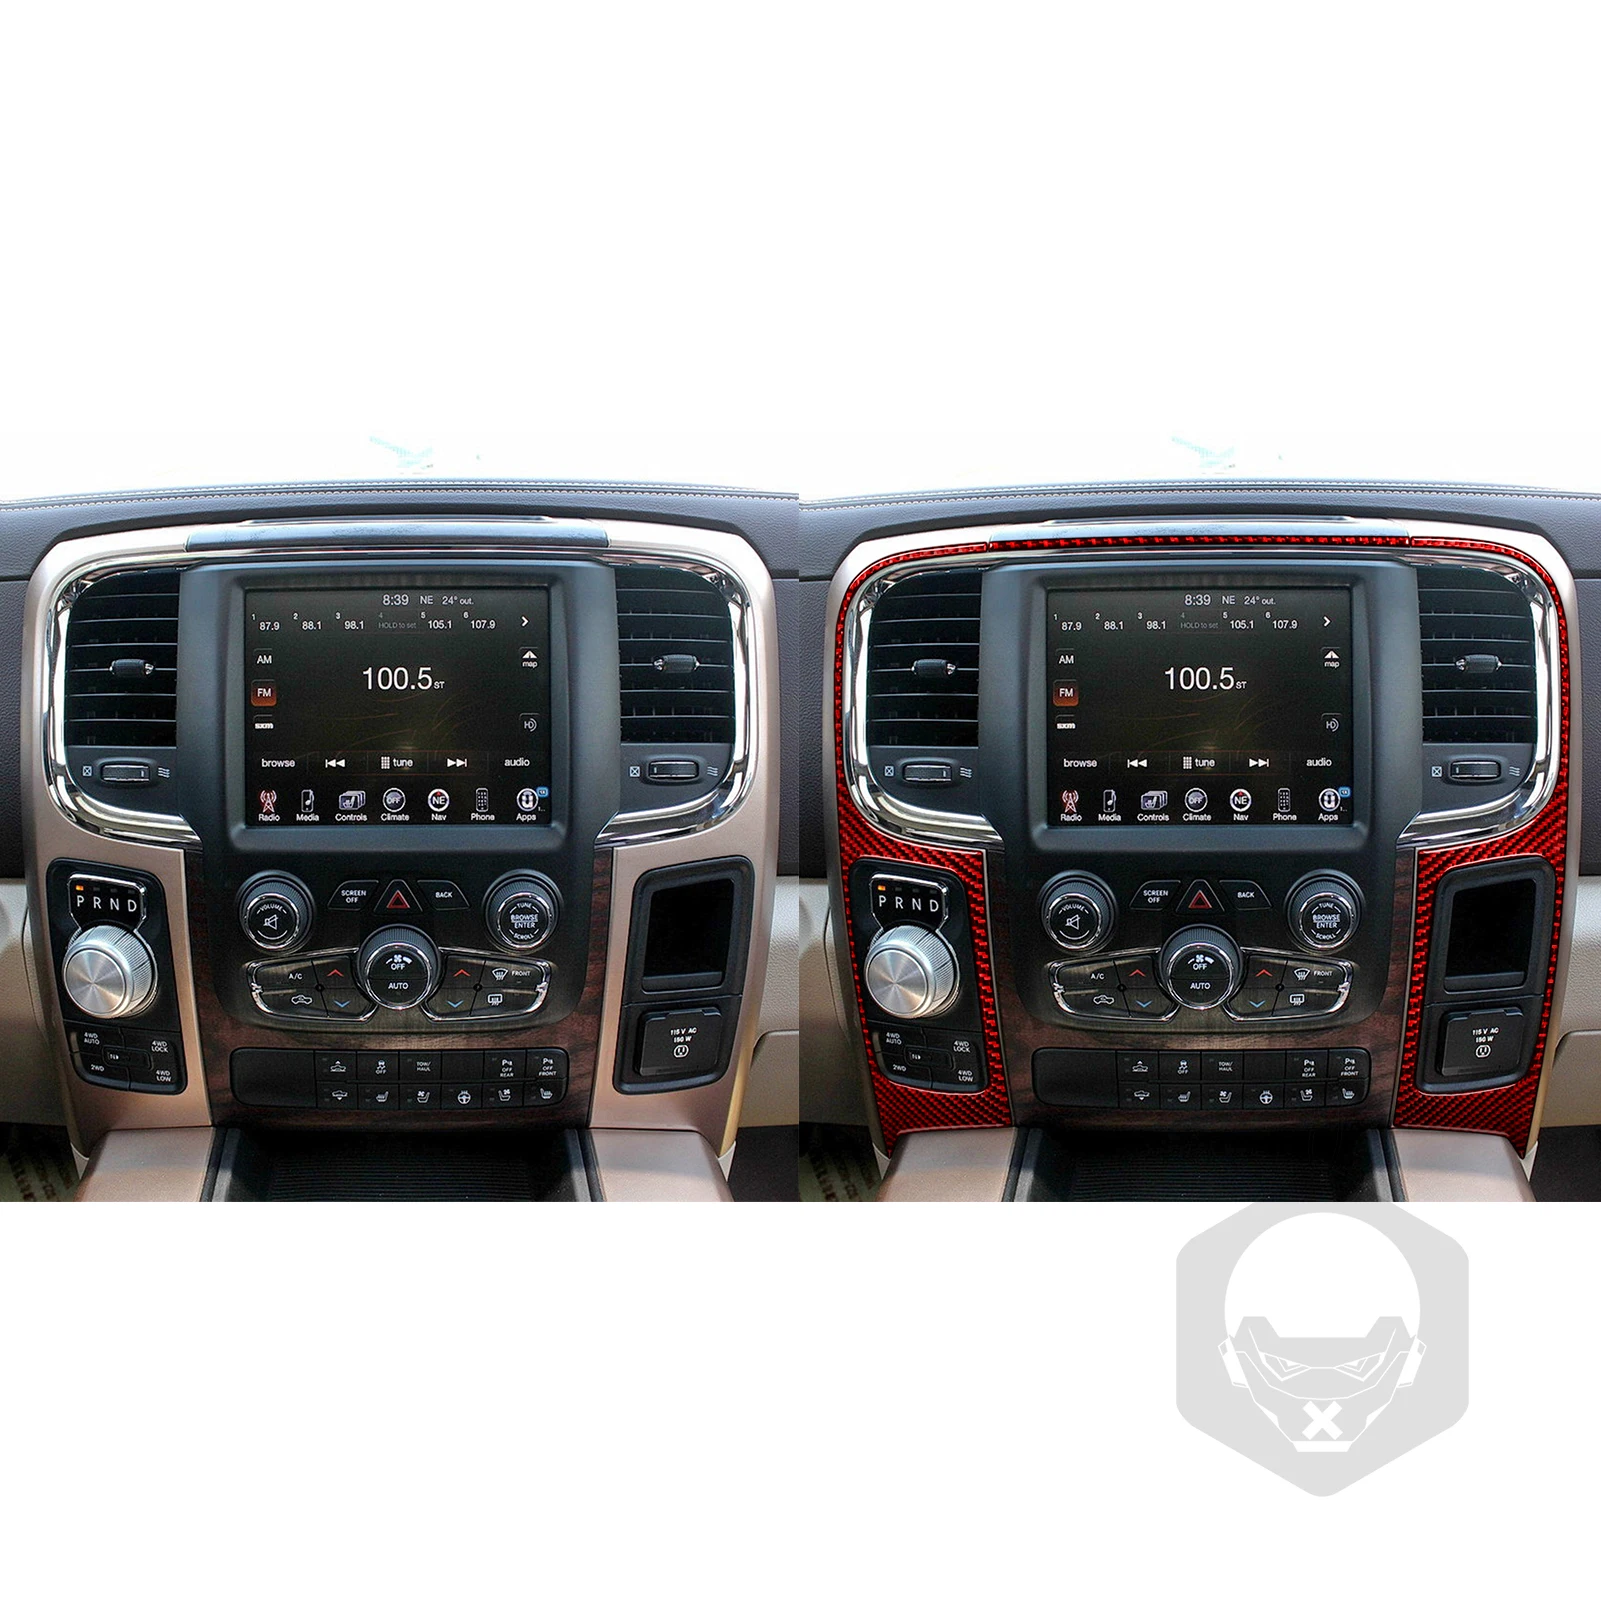 For Dodge Ram 2013 2014 2015 Central Air Outlet Temperature Display Control Panel Cover Trim Carbon Fiber Accessori Interior